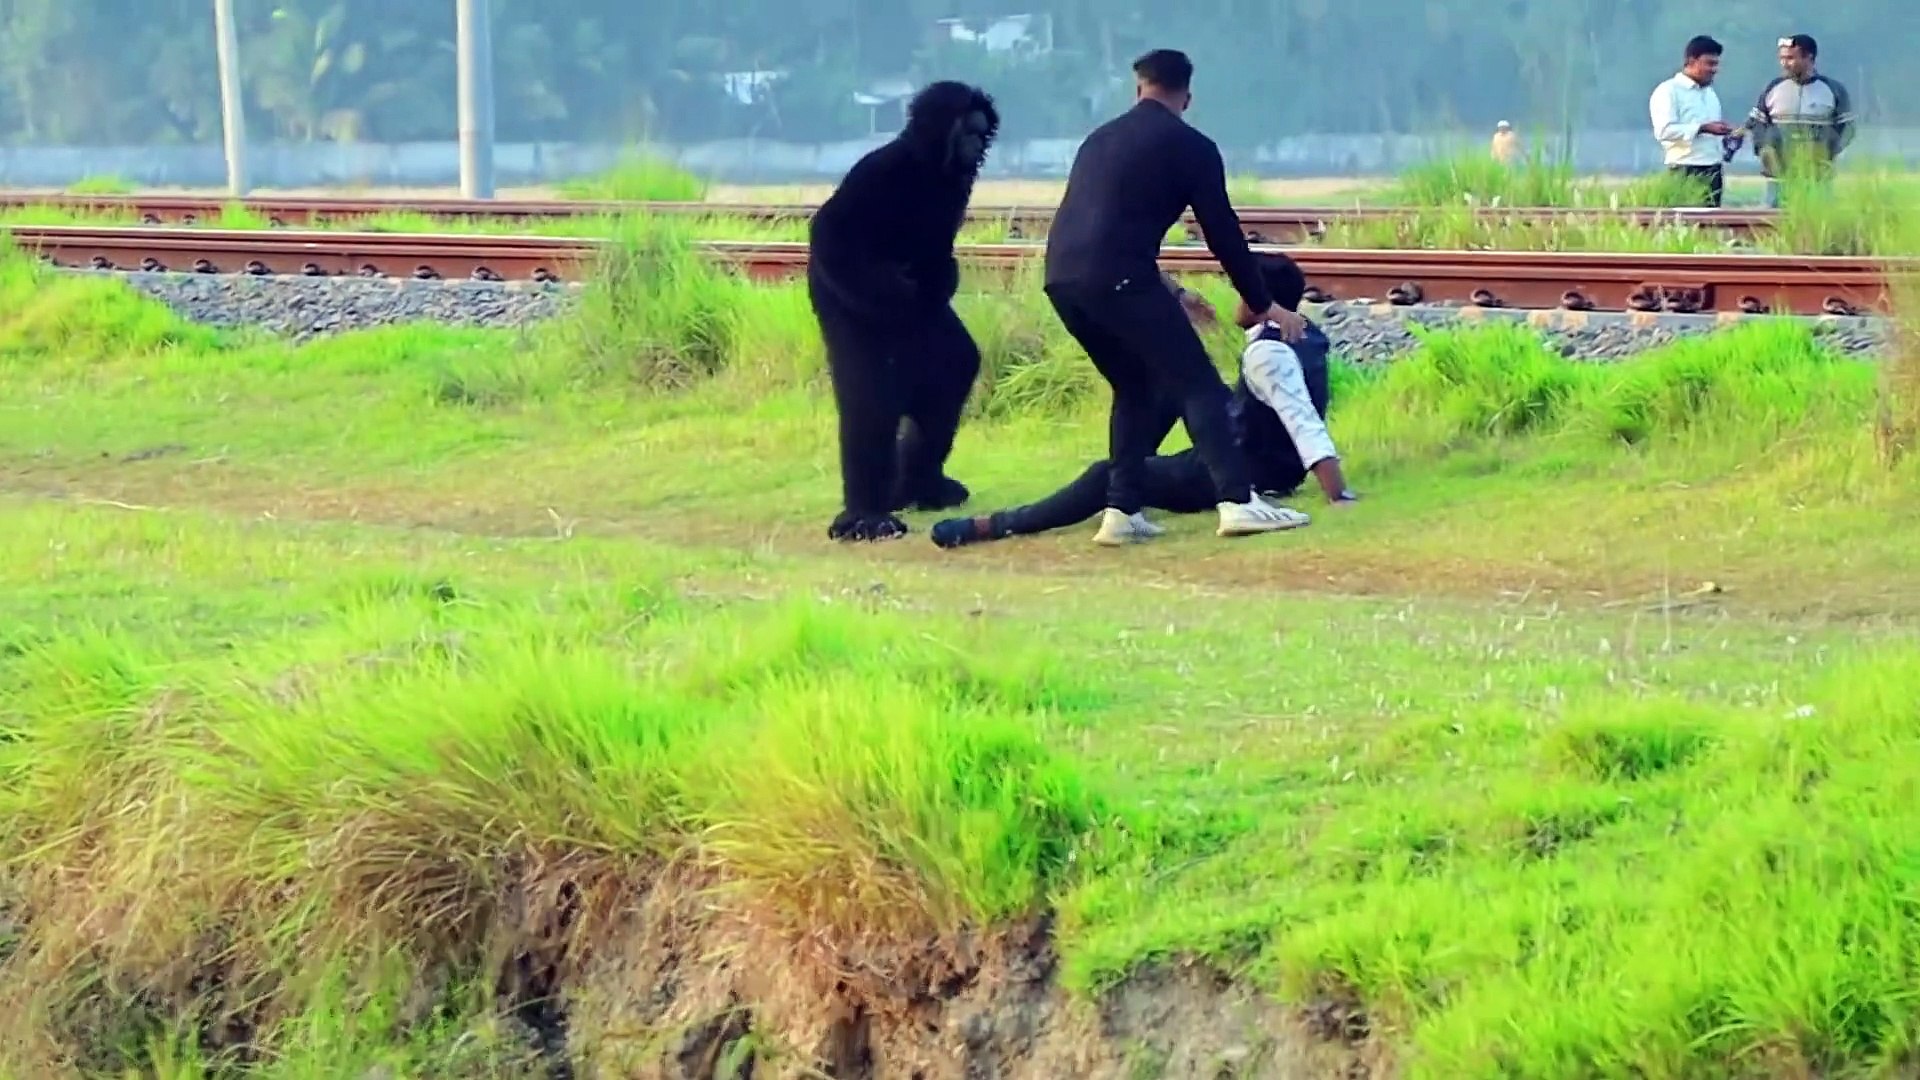 Gorilla Attack Prank | Scary Fake Gorilla Prank on Public